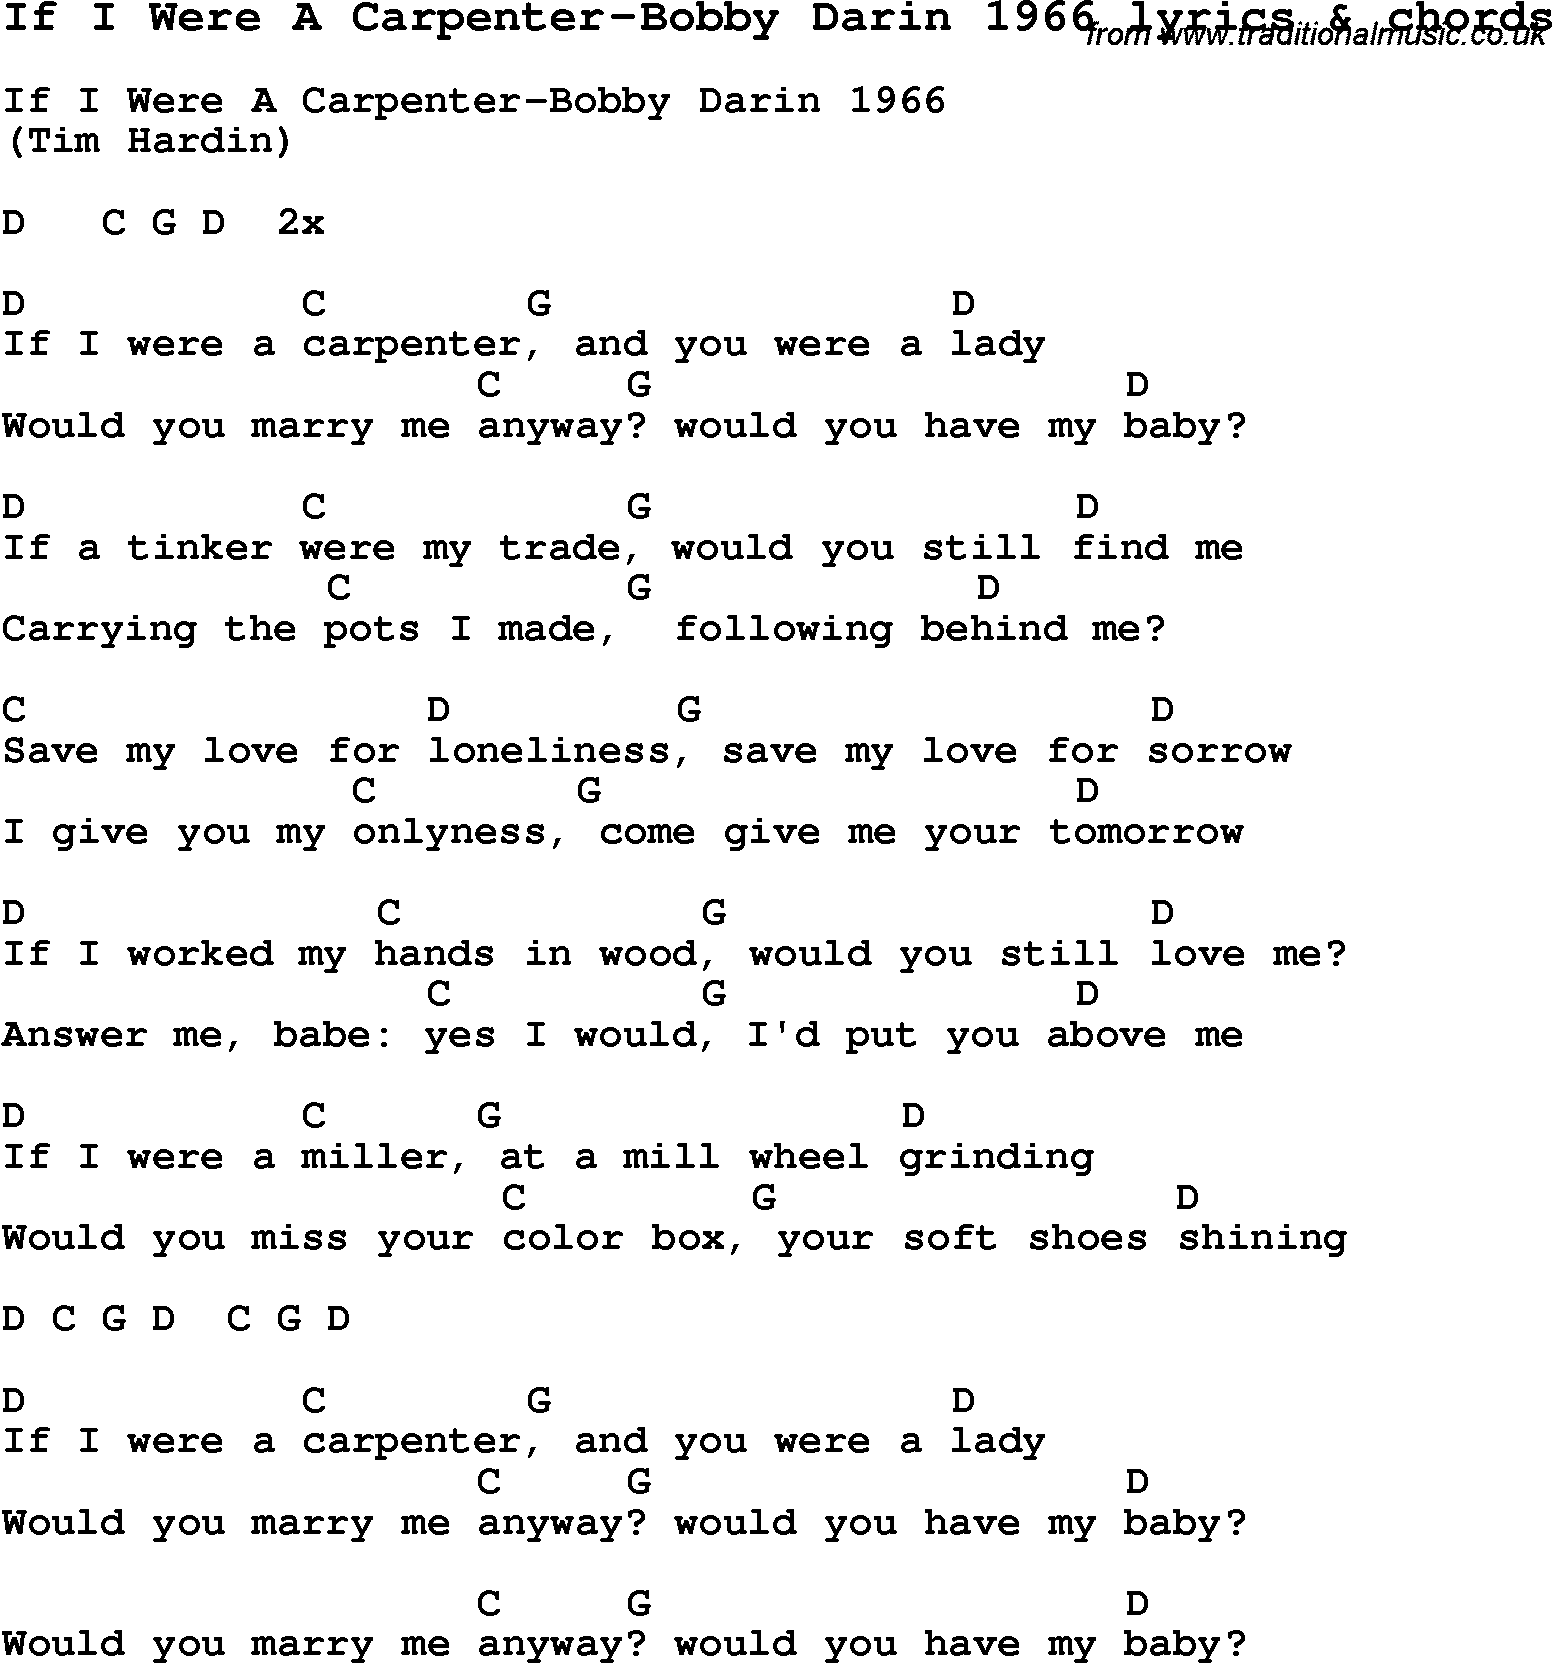 Love Song Lyrics for: If I Were A Carpenter-Bobby Darin 1966 with chords for Ukulele, Guitar Banjo etc.